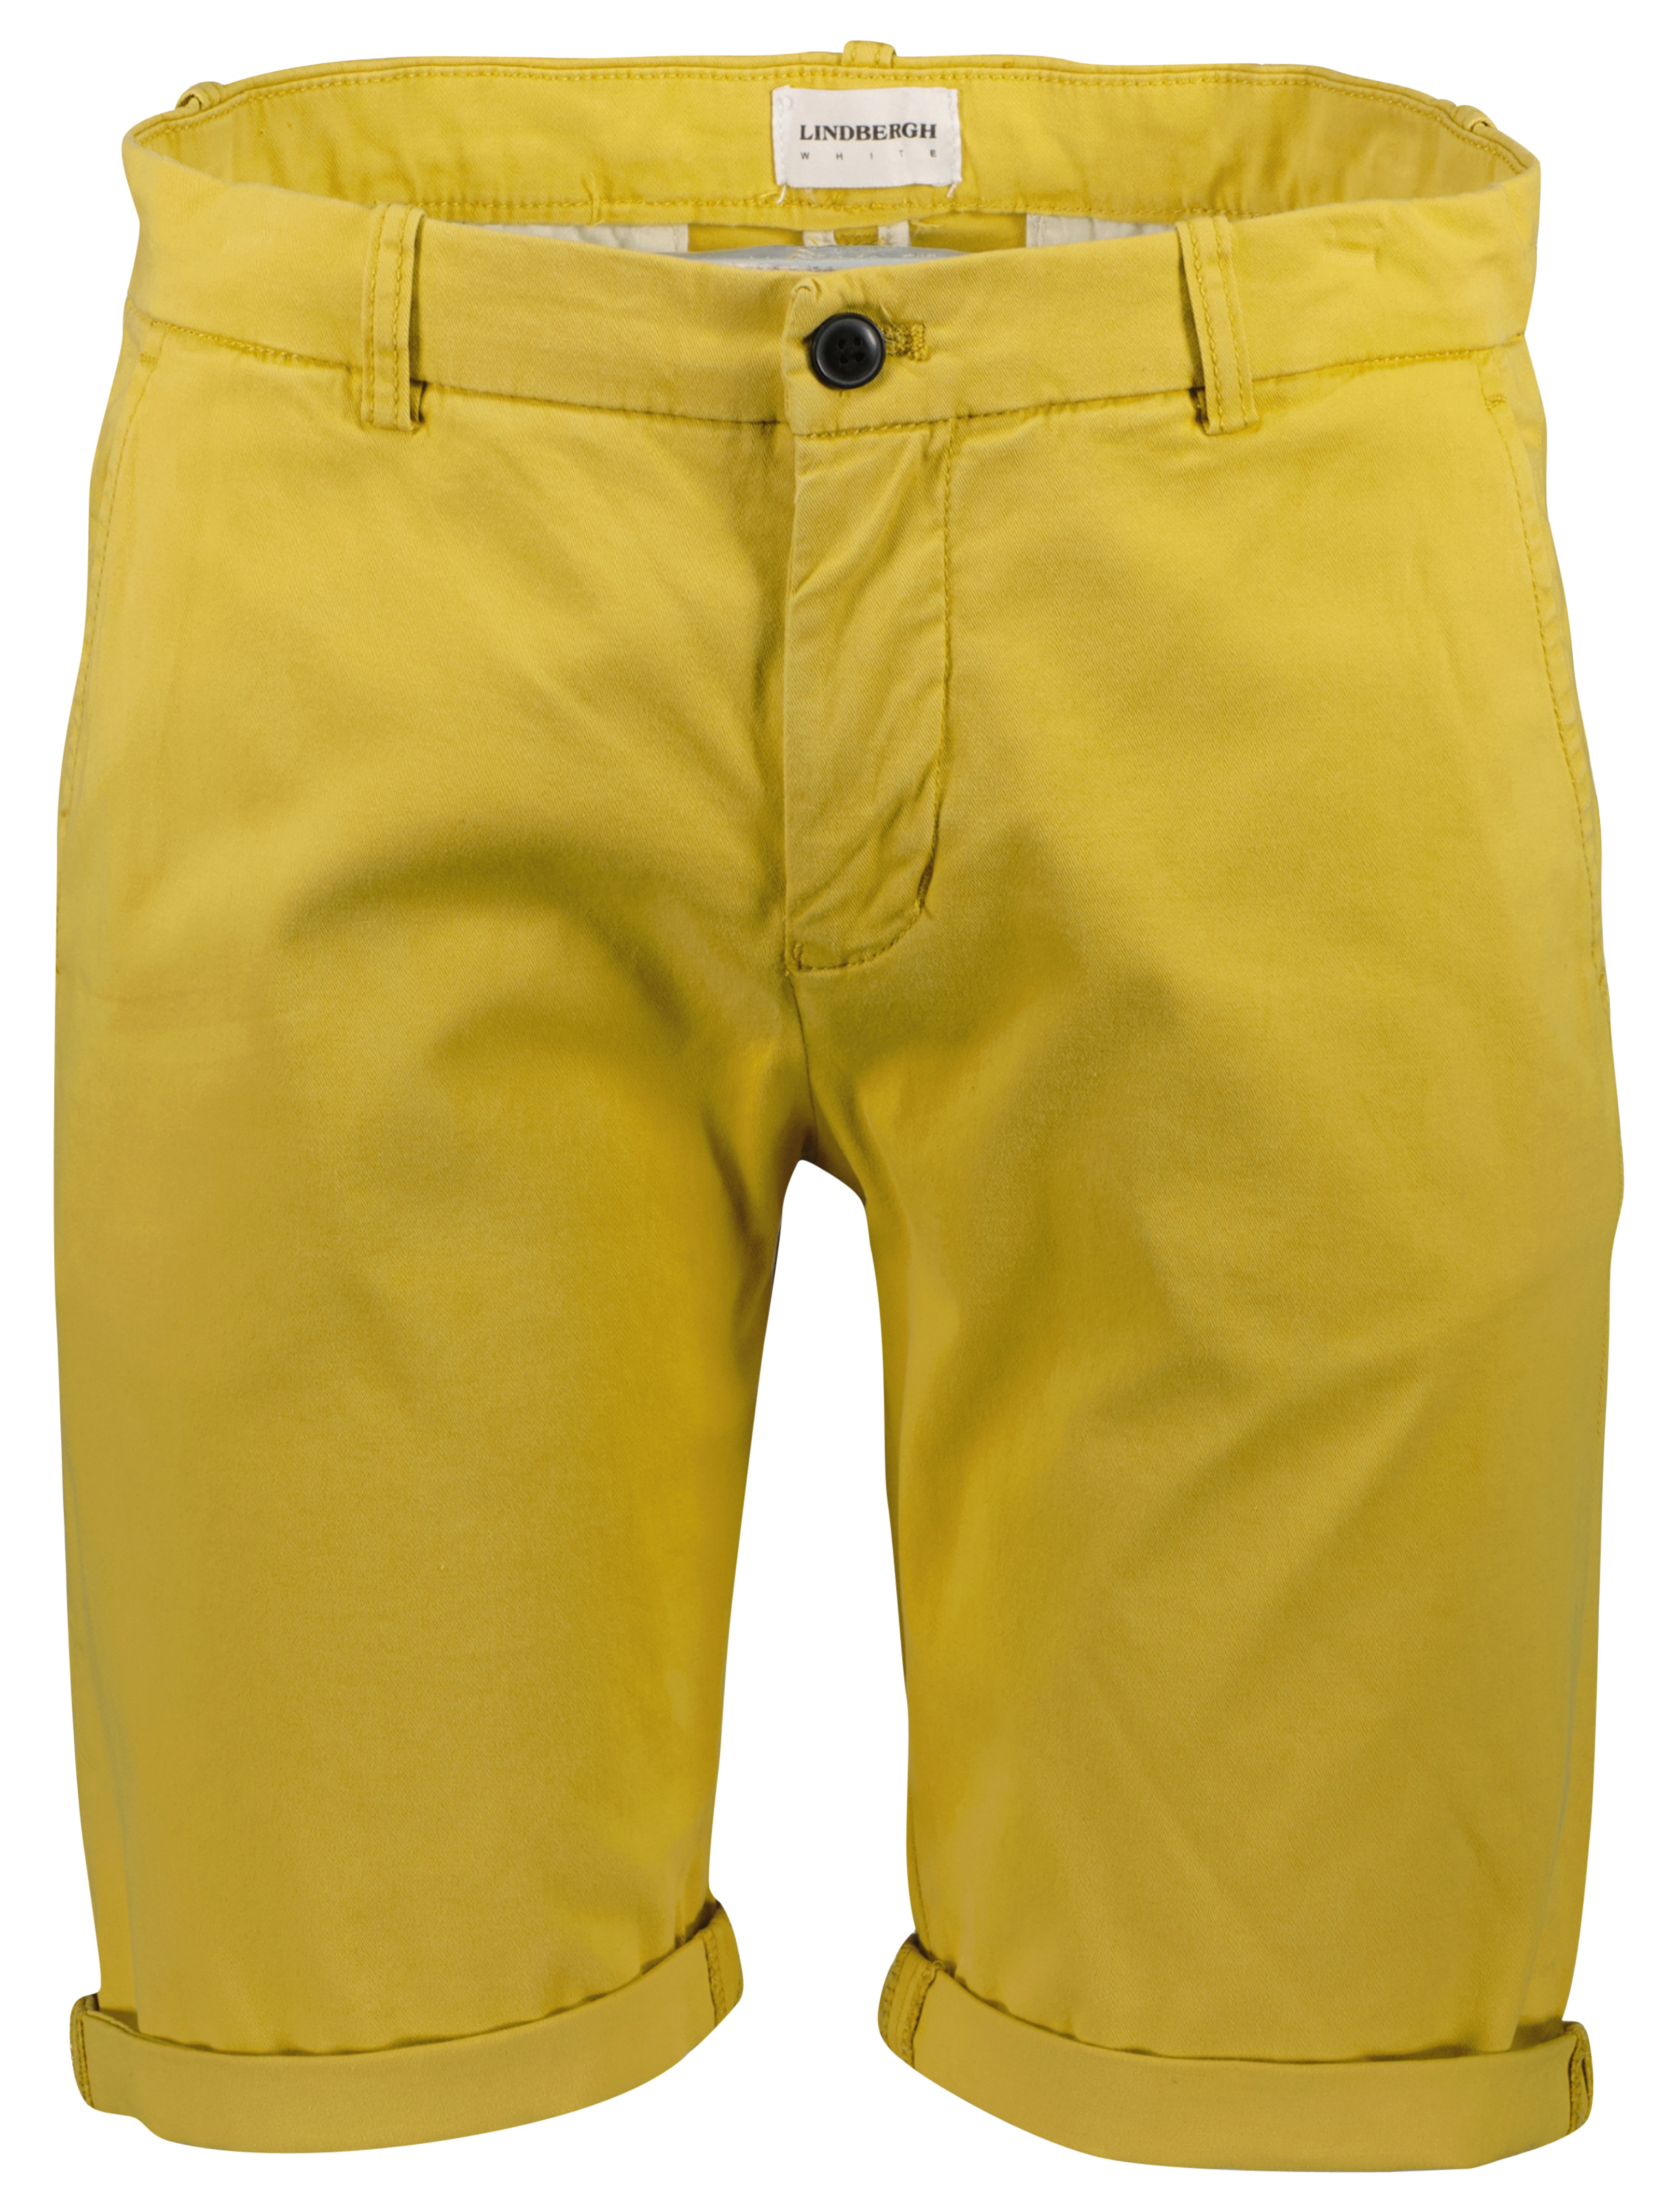 Lindbergh Chino shorts yellow / dk yellow